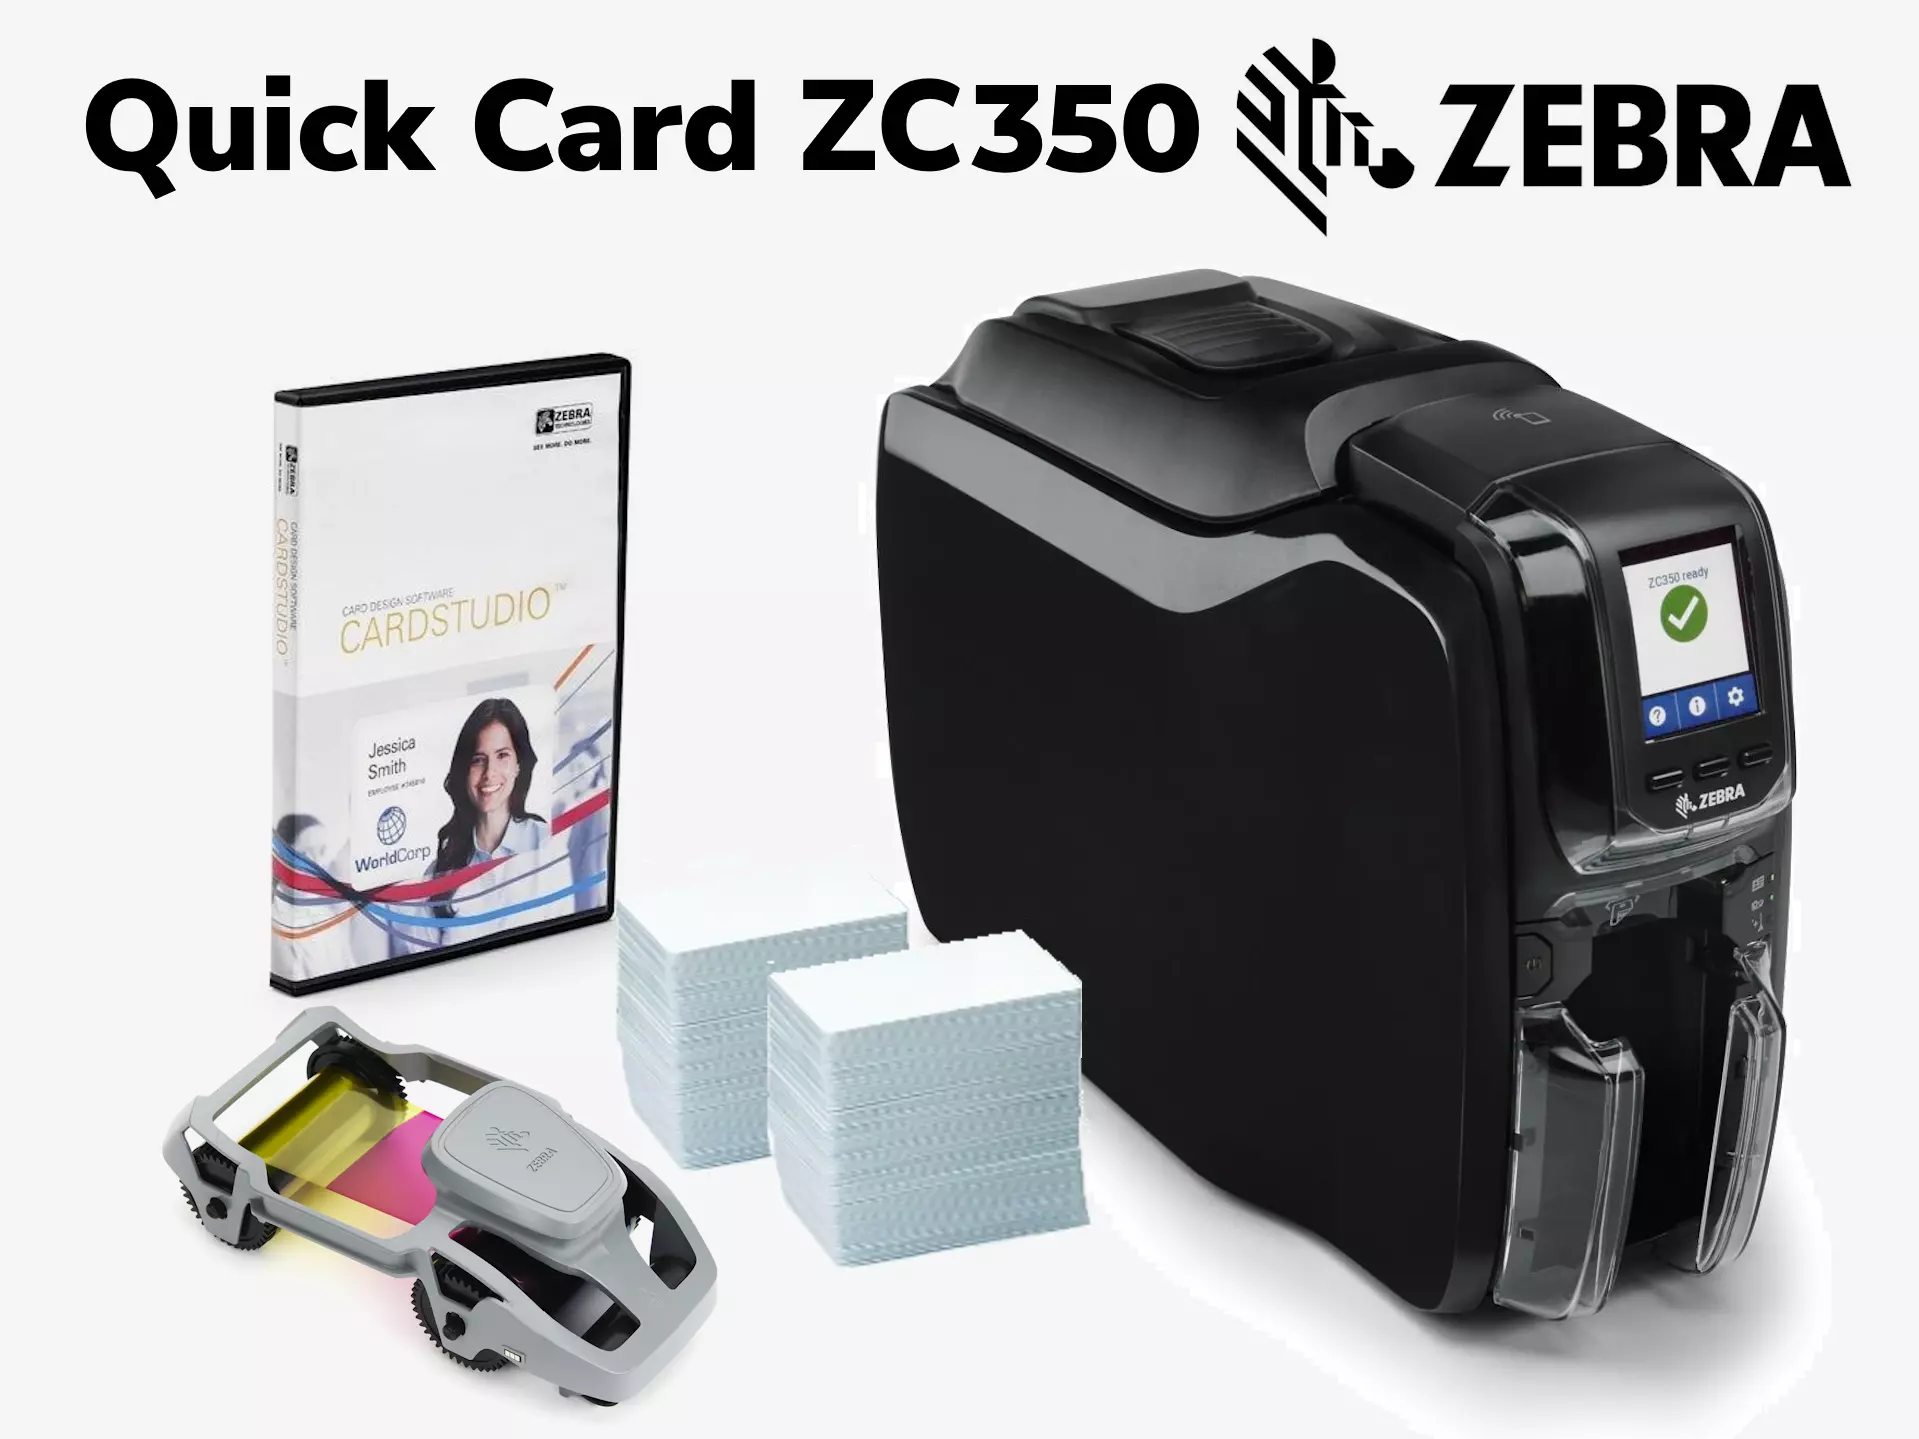 Quick card ZC350 - Promociones